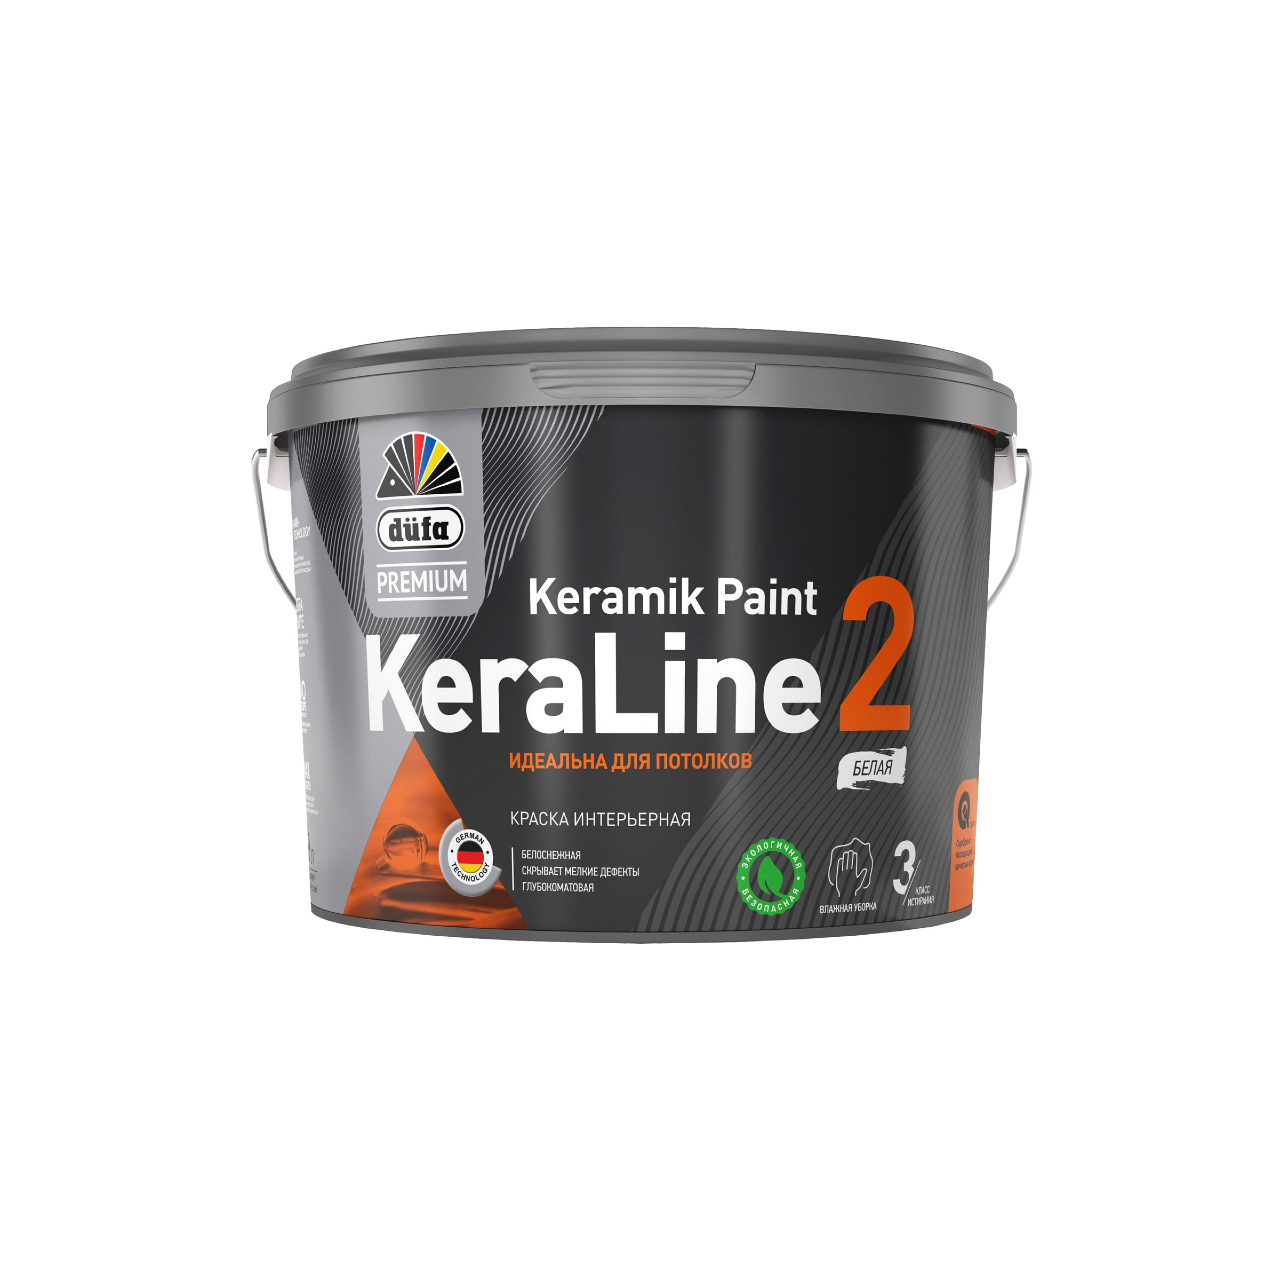 90190632 Краска для потолков Premium KeraLine Keramik Paint 2 глубокоматовая белая база 1 2.5 л STLM-0126779 DUFA